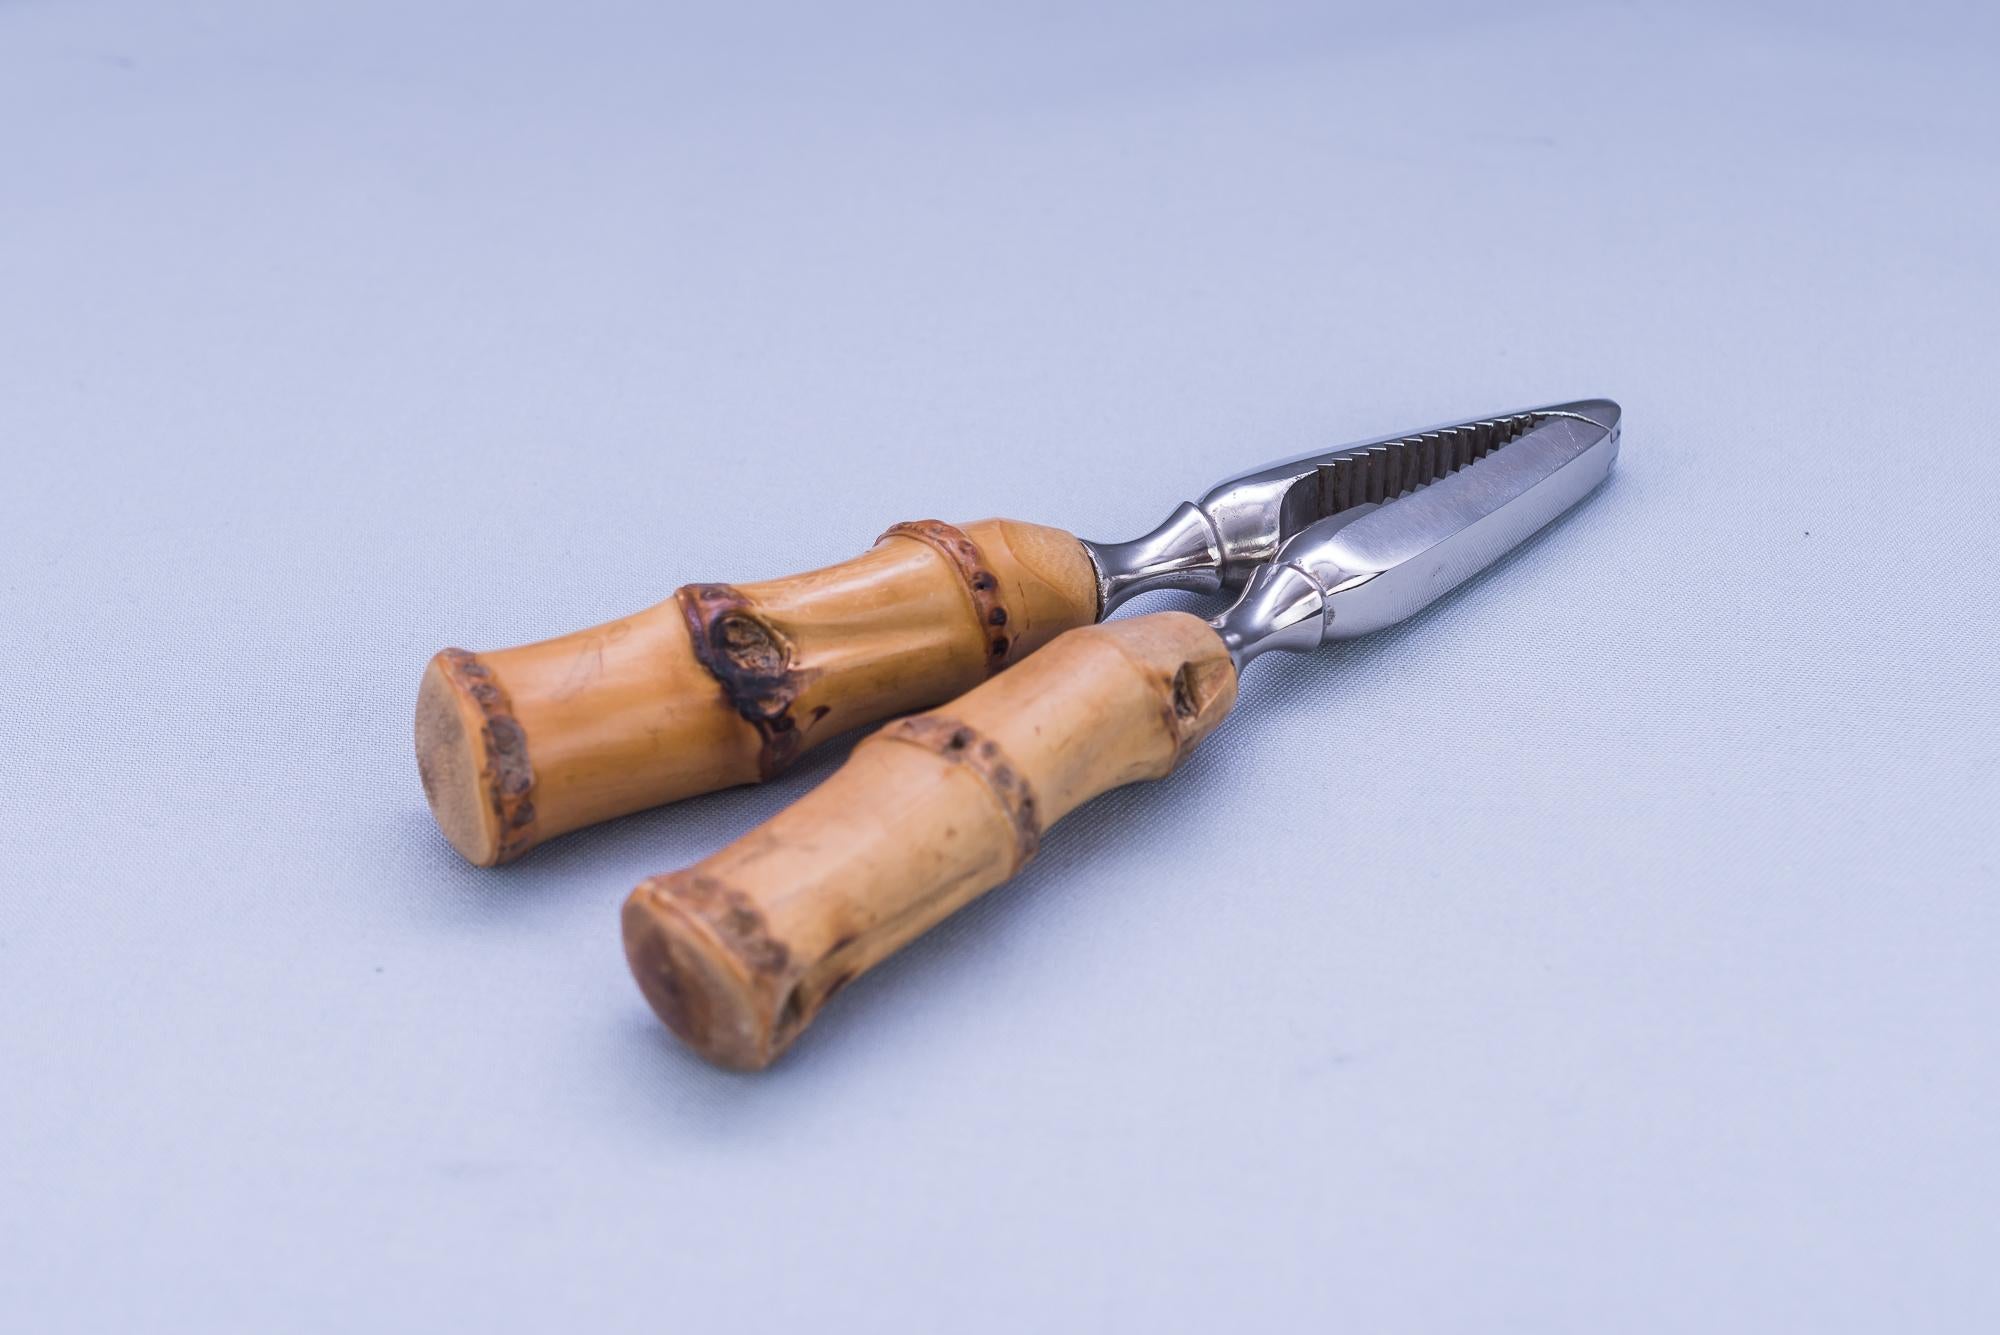 Nutcracker with bamboo handle vienna circa 1950s (Nickel-Plated).
Original condition.
      